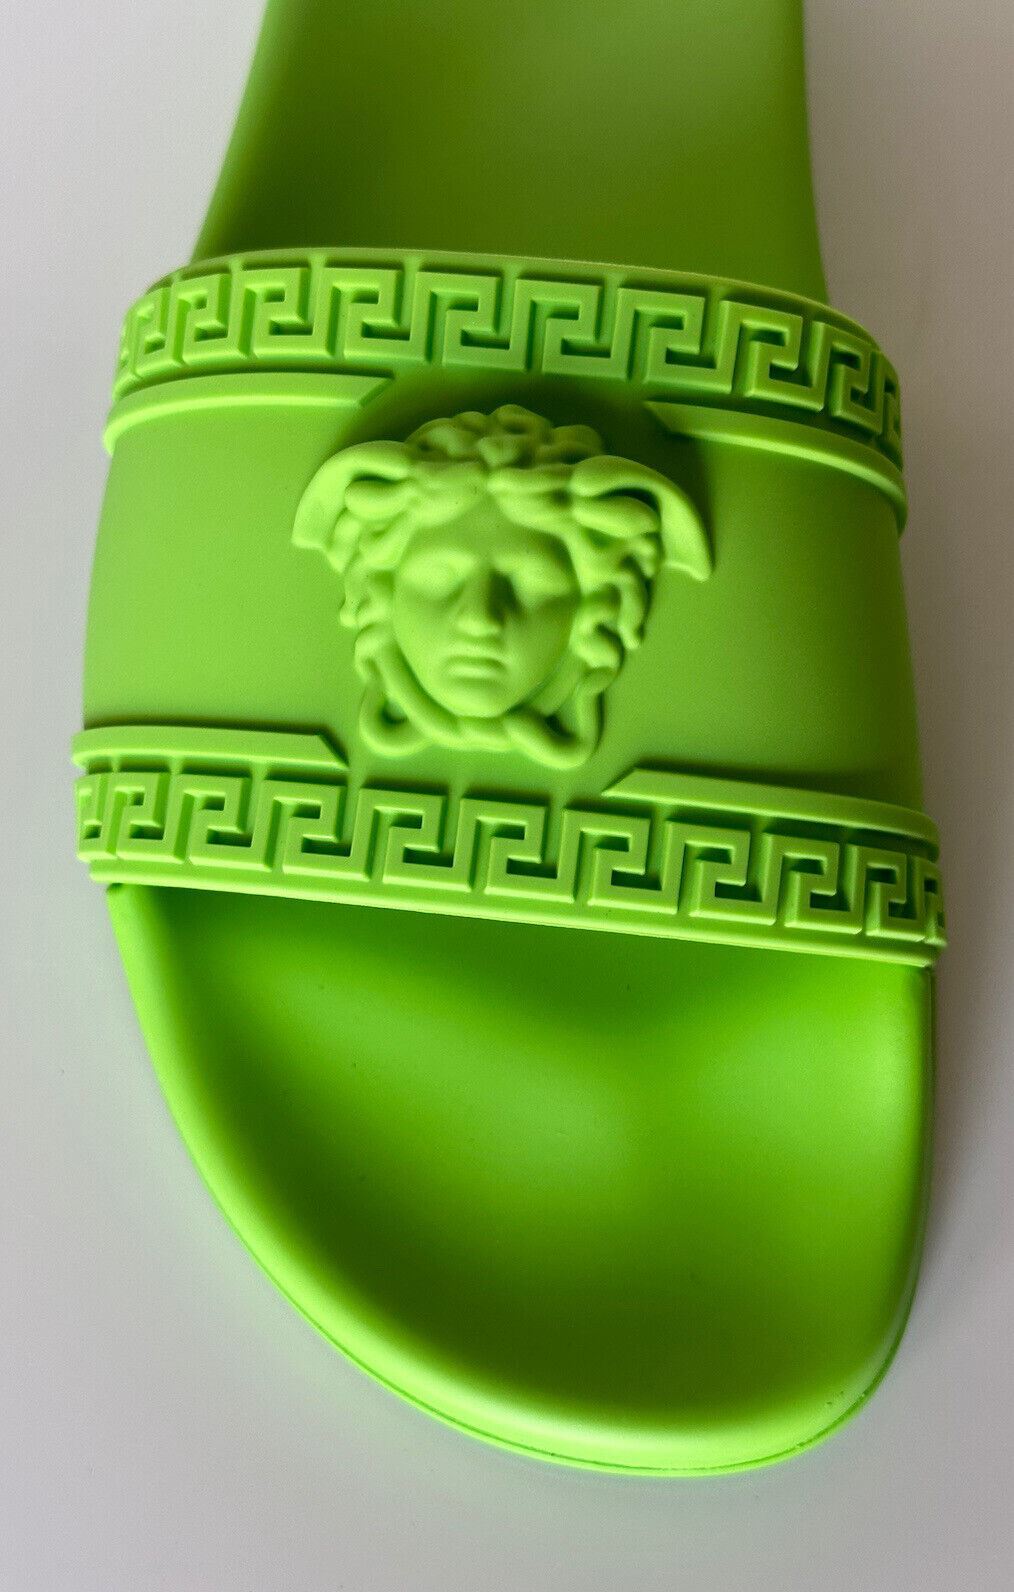 NIB Versace Босоножки-шлепанцы Medusa Head Neon Green 10 США (43 евро) DSU5883 Италия 